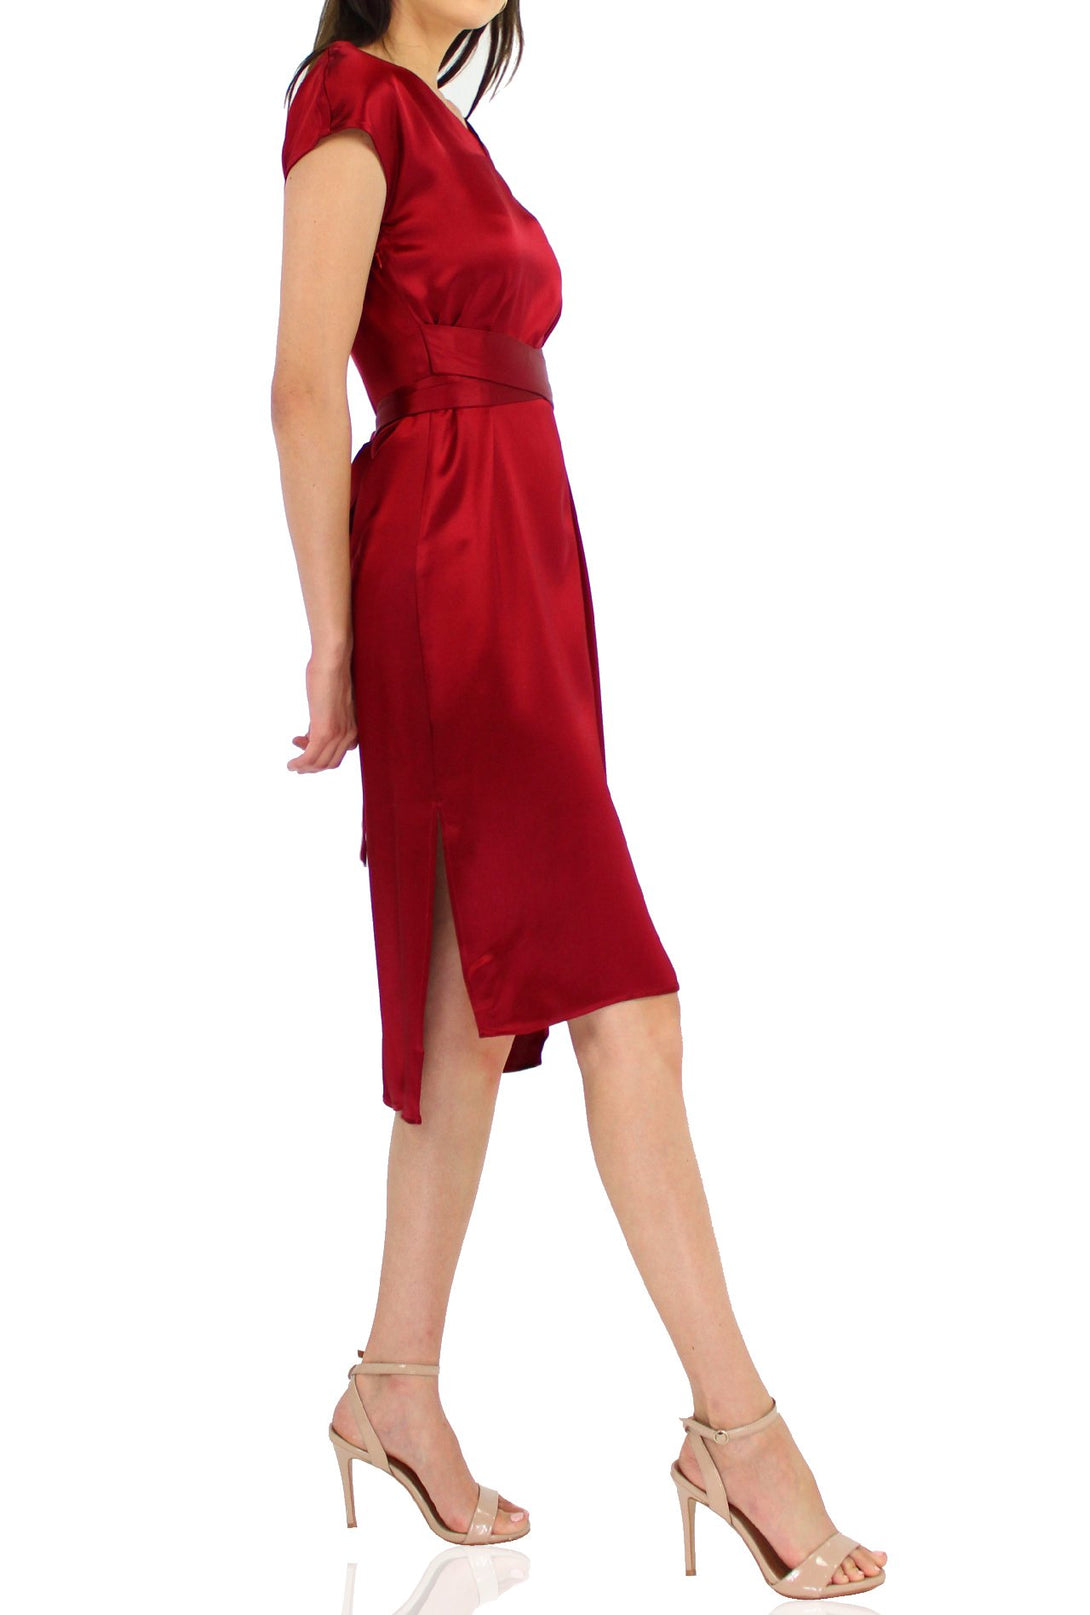 Designer-Belted-Mini-Dress-In-Red-By-Kyle-Richard